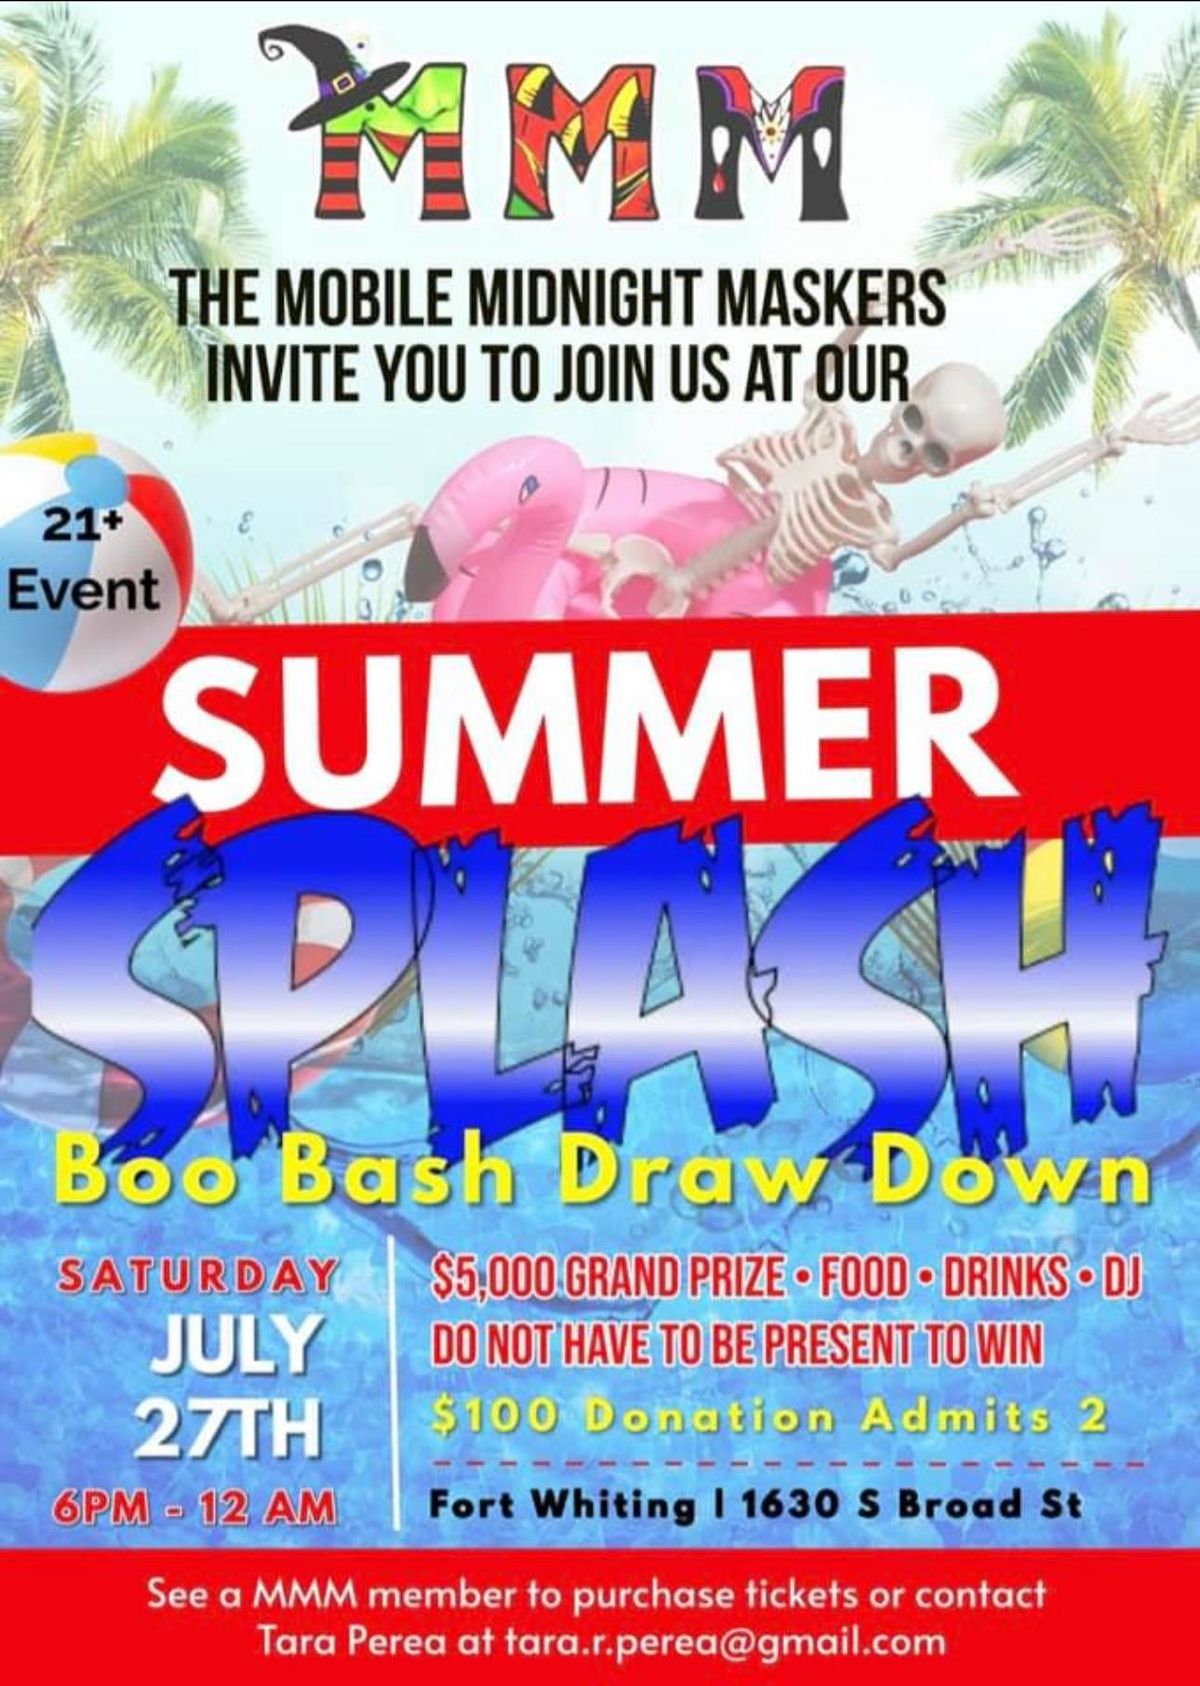 MMM Summer Splash Boo Bash Draw Down